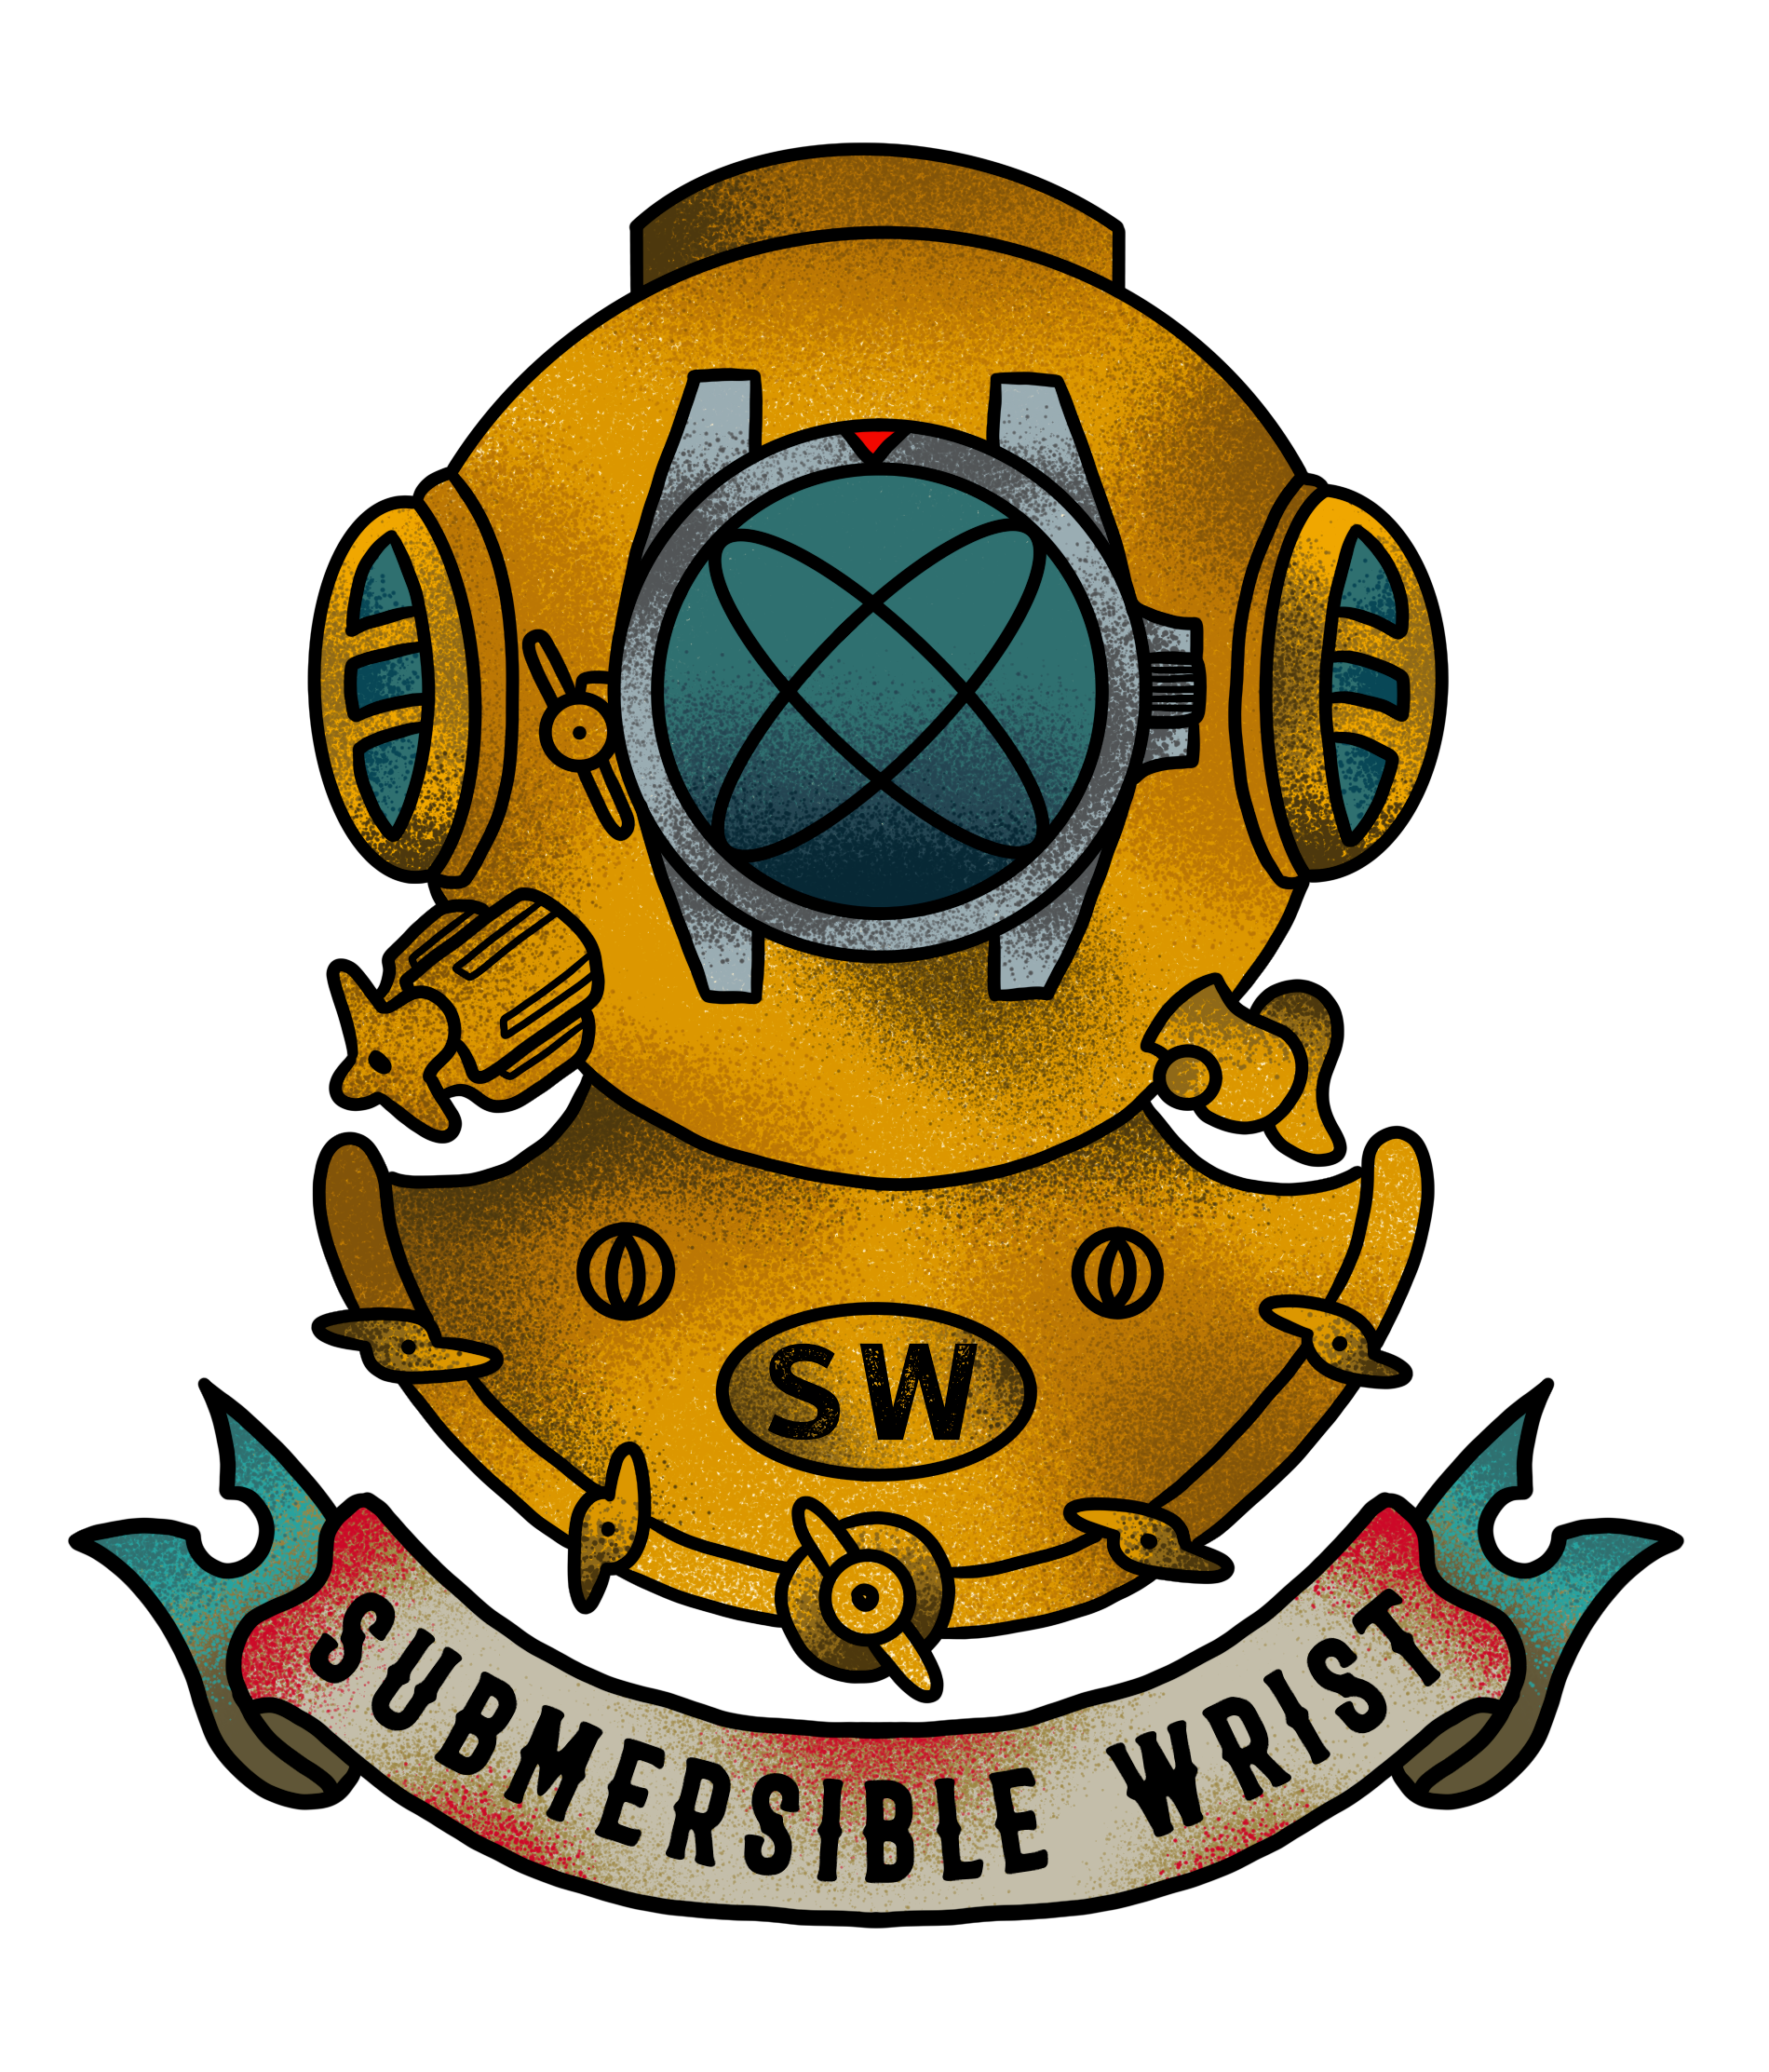 Submersible Wrist